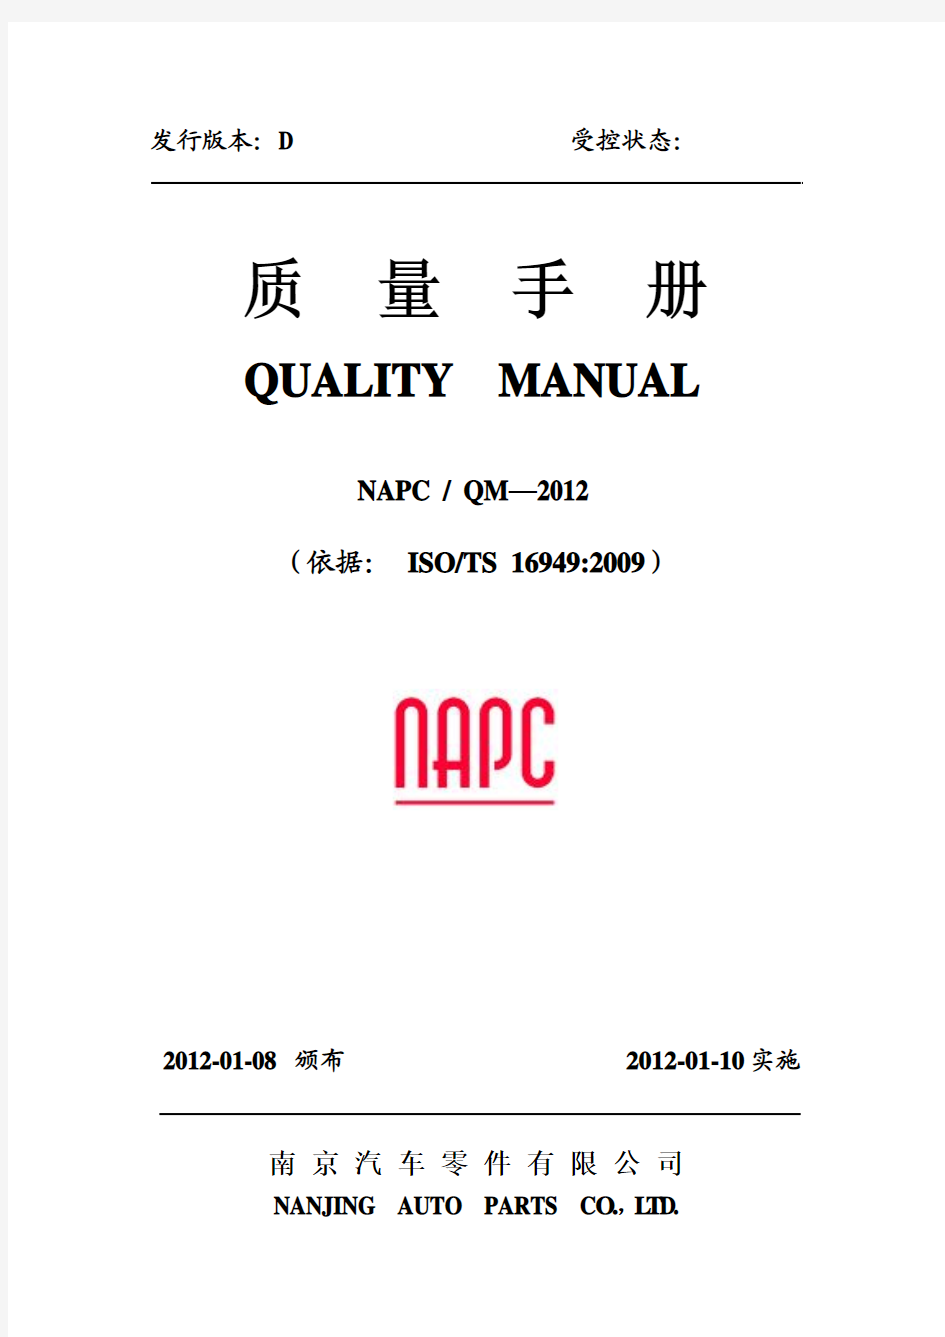 质量手册全文(NAPC-QM-2012)